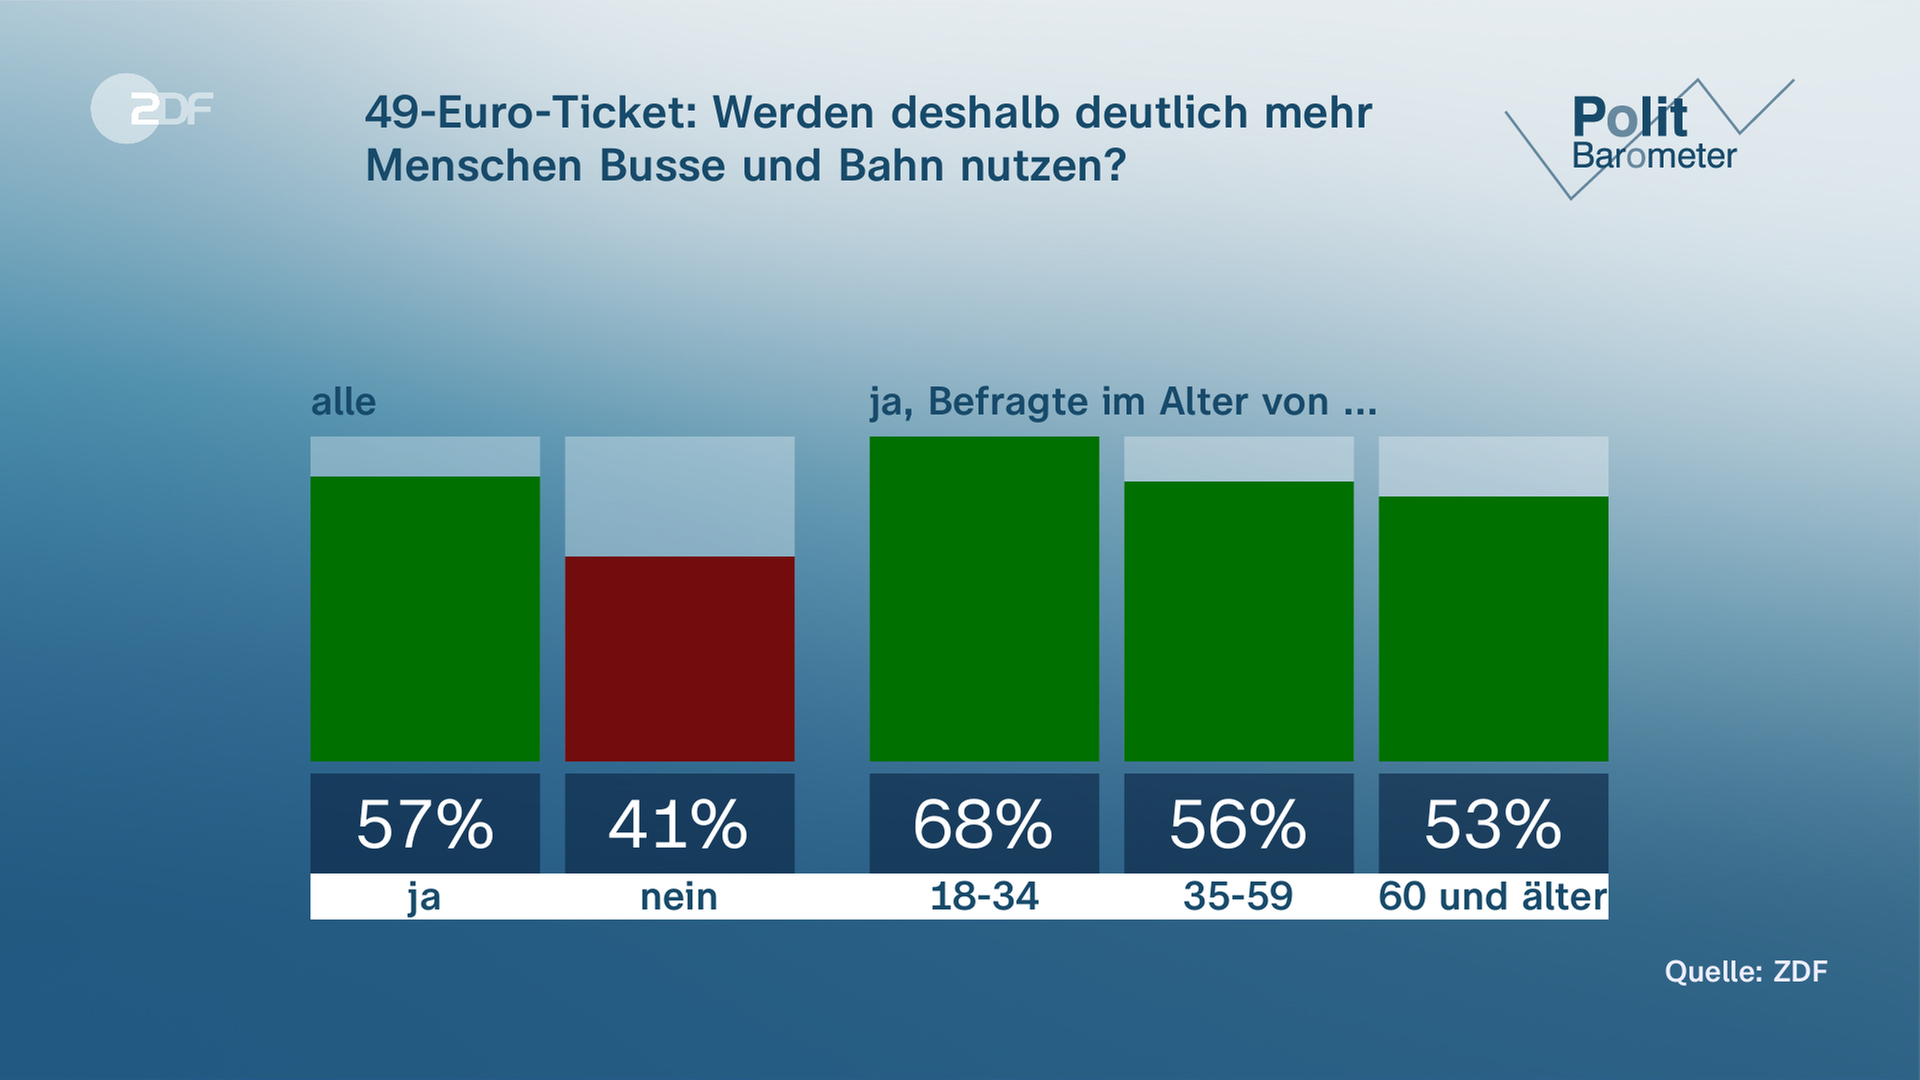 Politbarometer Grafik zu 49-Euro-Ticket